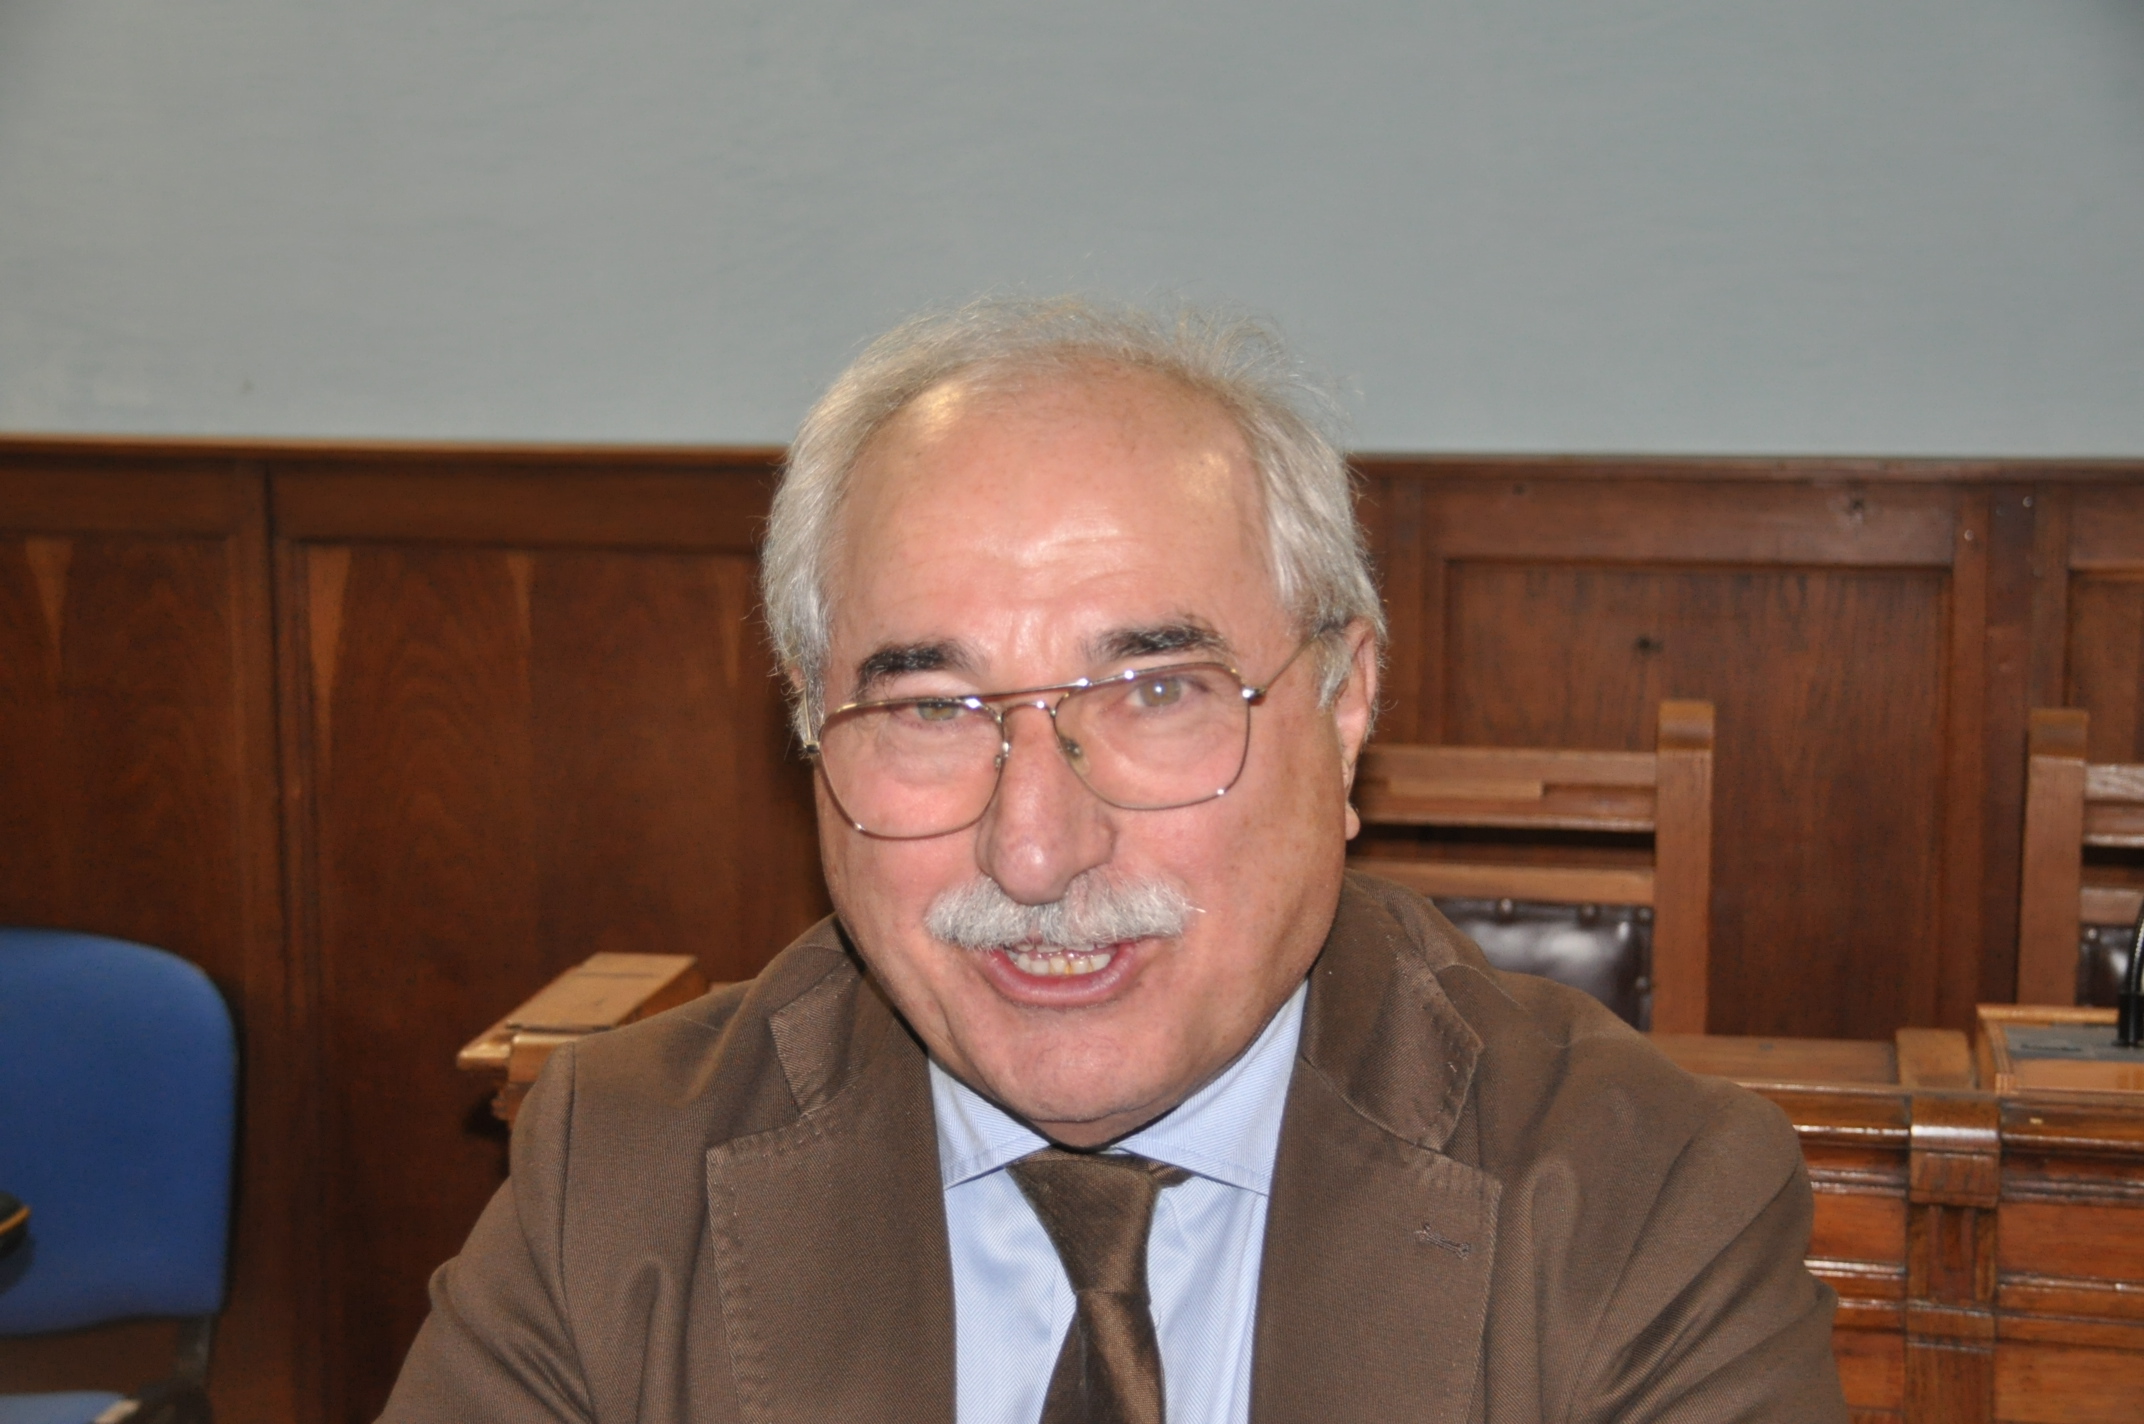 Provincia, Alfonso Ciervo vice presidente “strategico”